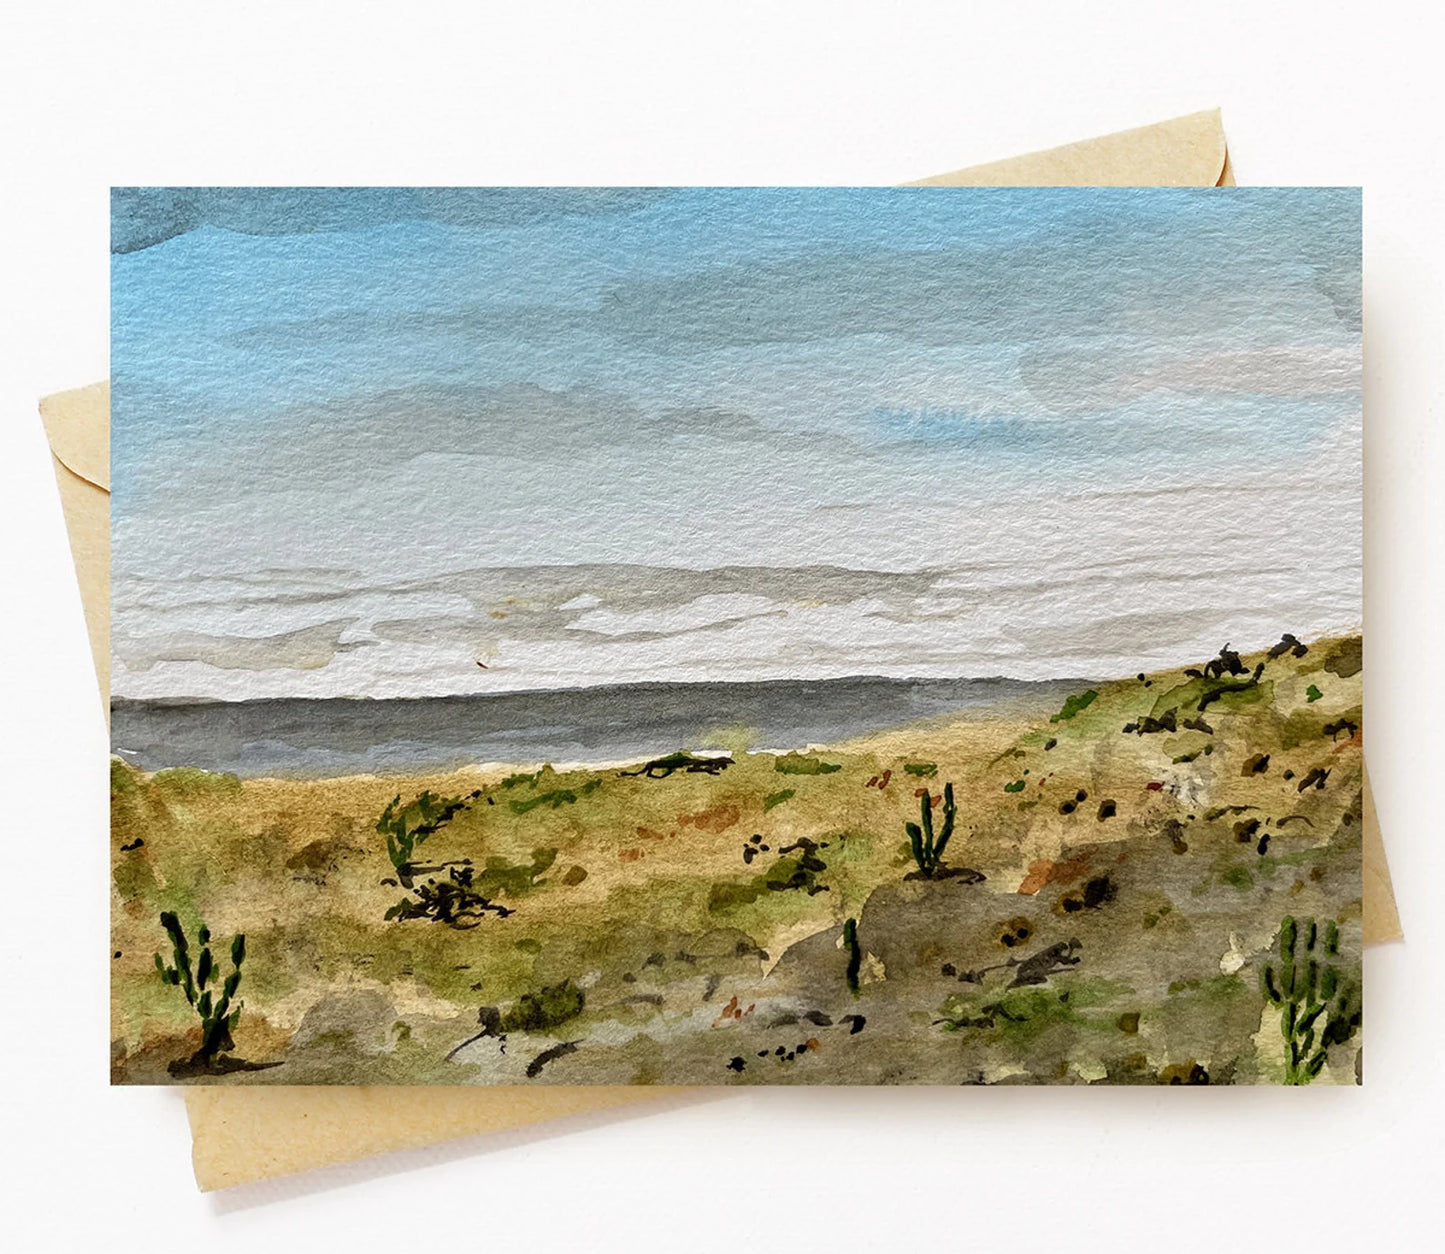 BellavanceInk: Greeting Card With Watercolor Of A Beach View In Todos Santos Mexico 5 x 7 Inches - BellavanceInk